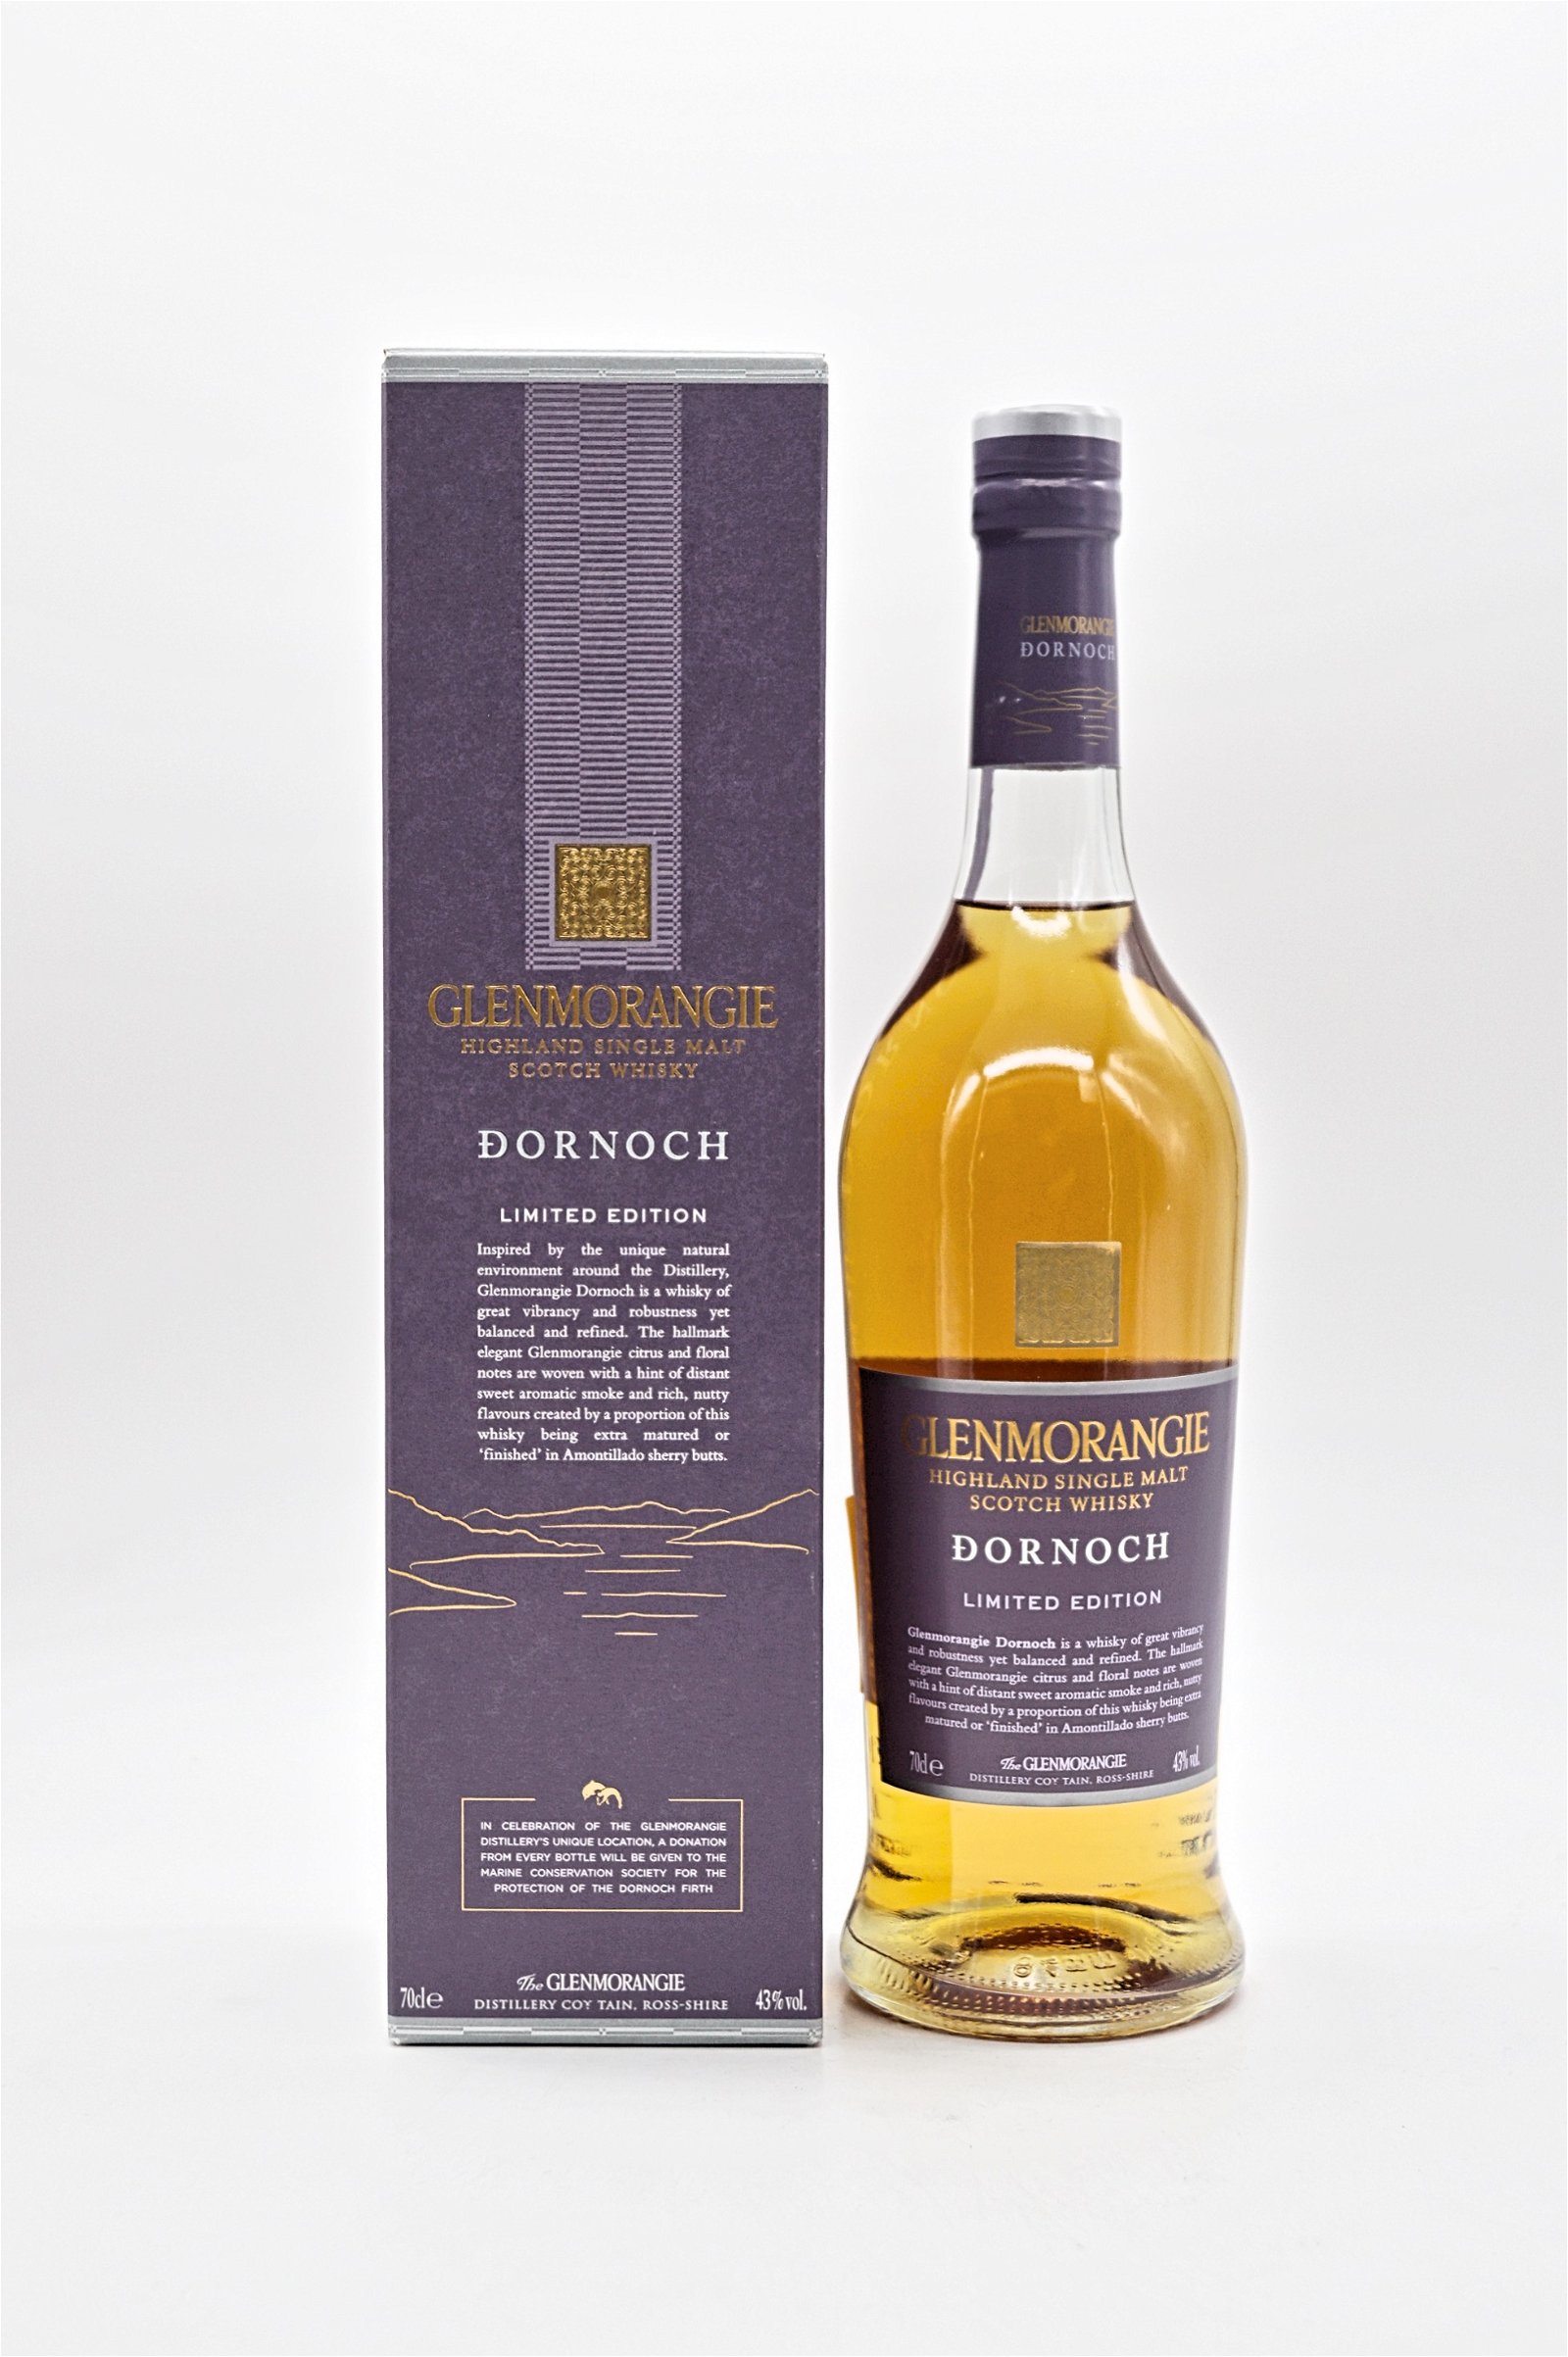 Glenmorangie Dornoch Limited Edition Highland Single Malt Scotch Whisky